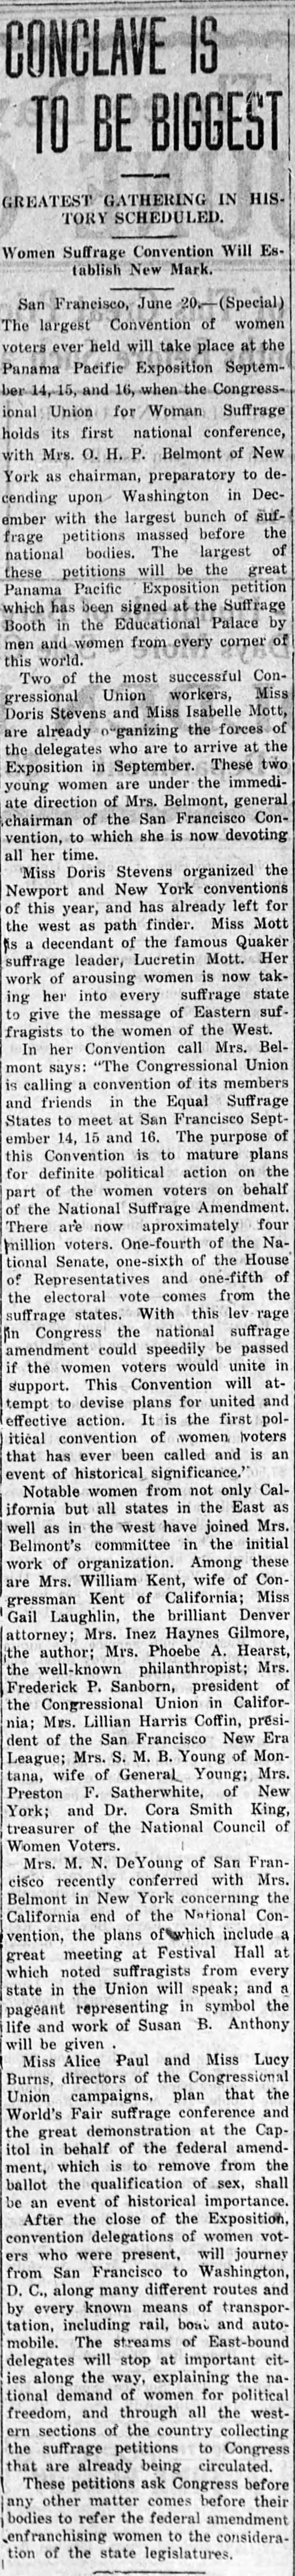 Conclave Is to Be Biggest, La Grande Observer (La Grande, Oregon) 23 June 1915, p 6